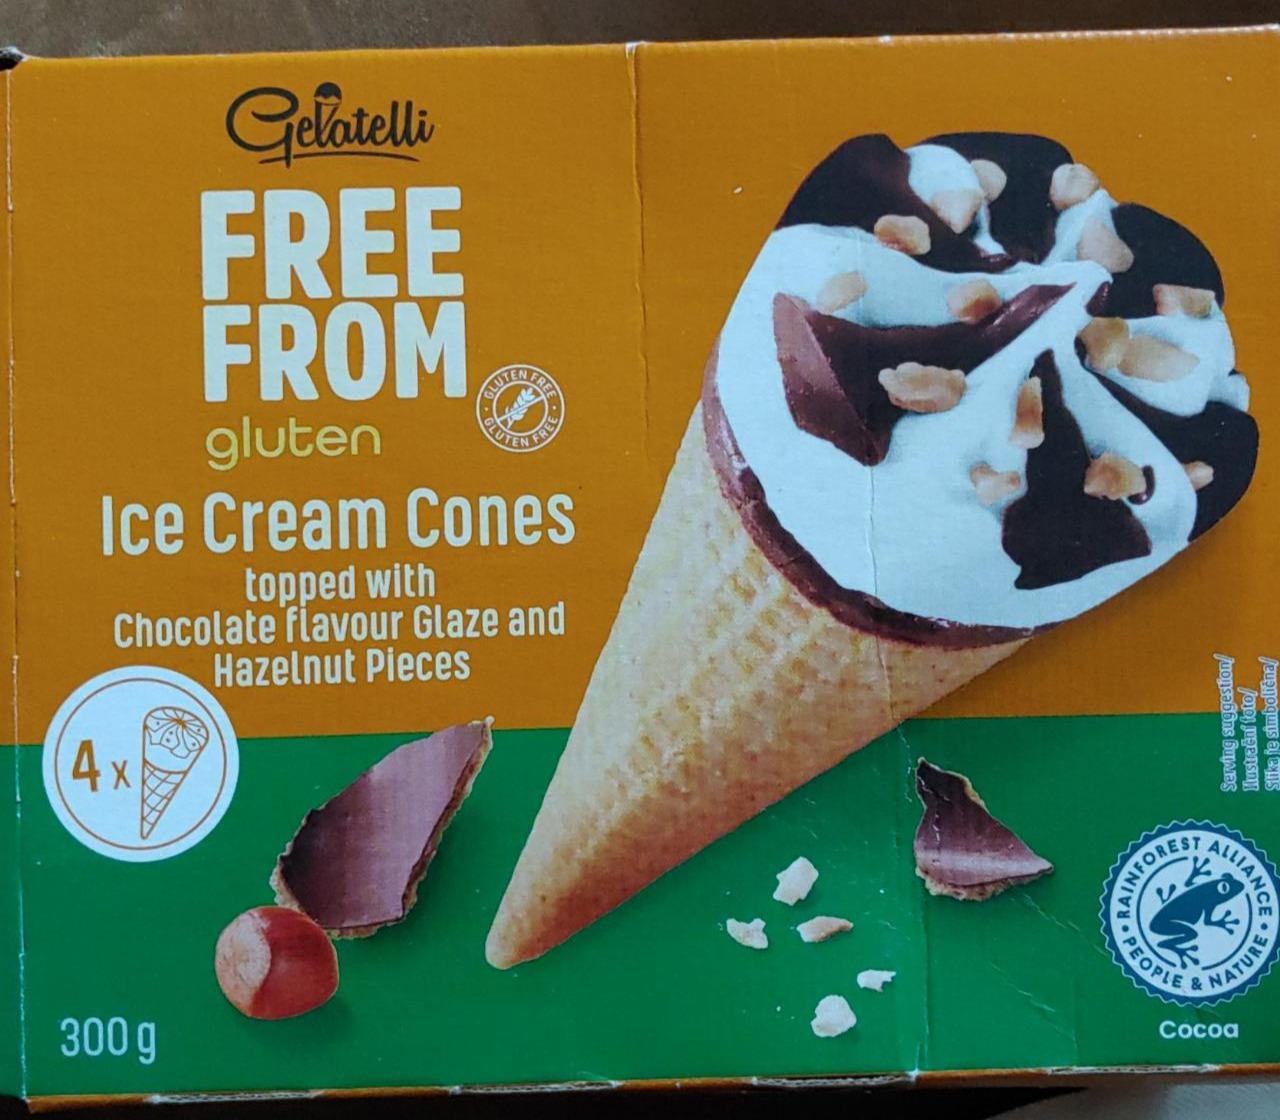 Fotografie - Free From gluten Ice Cream Cones Gelatelli